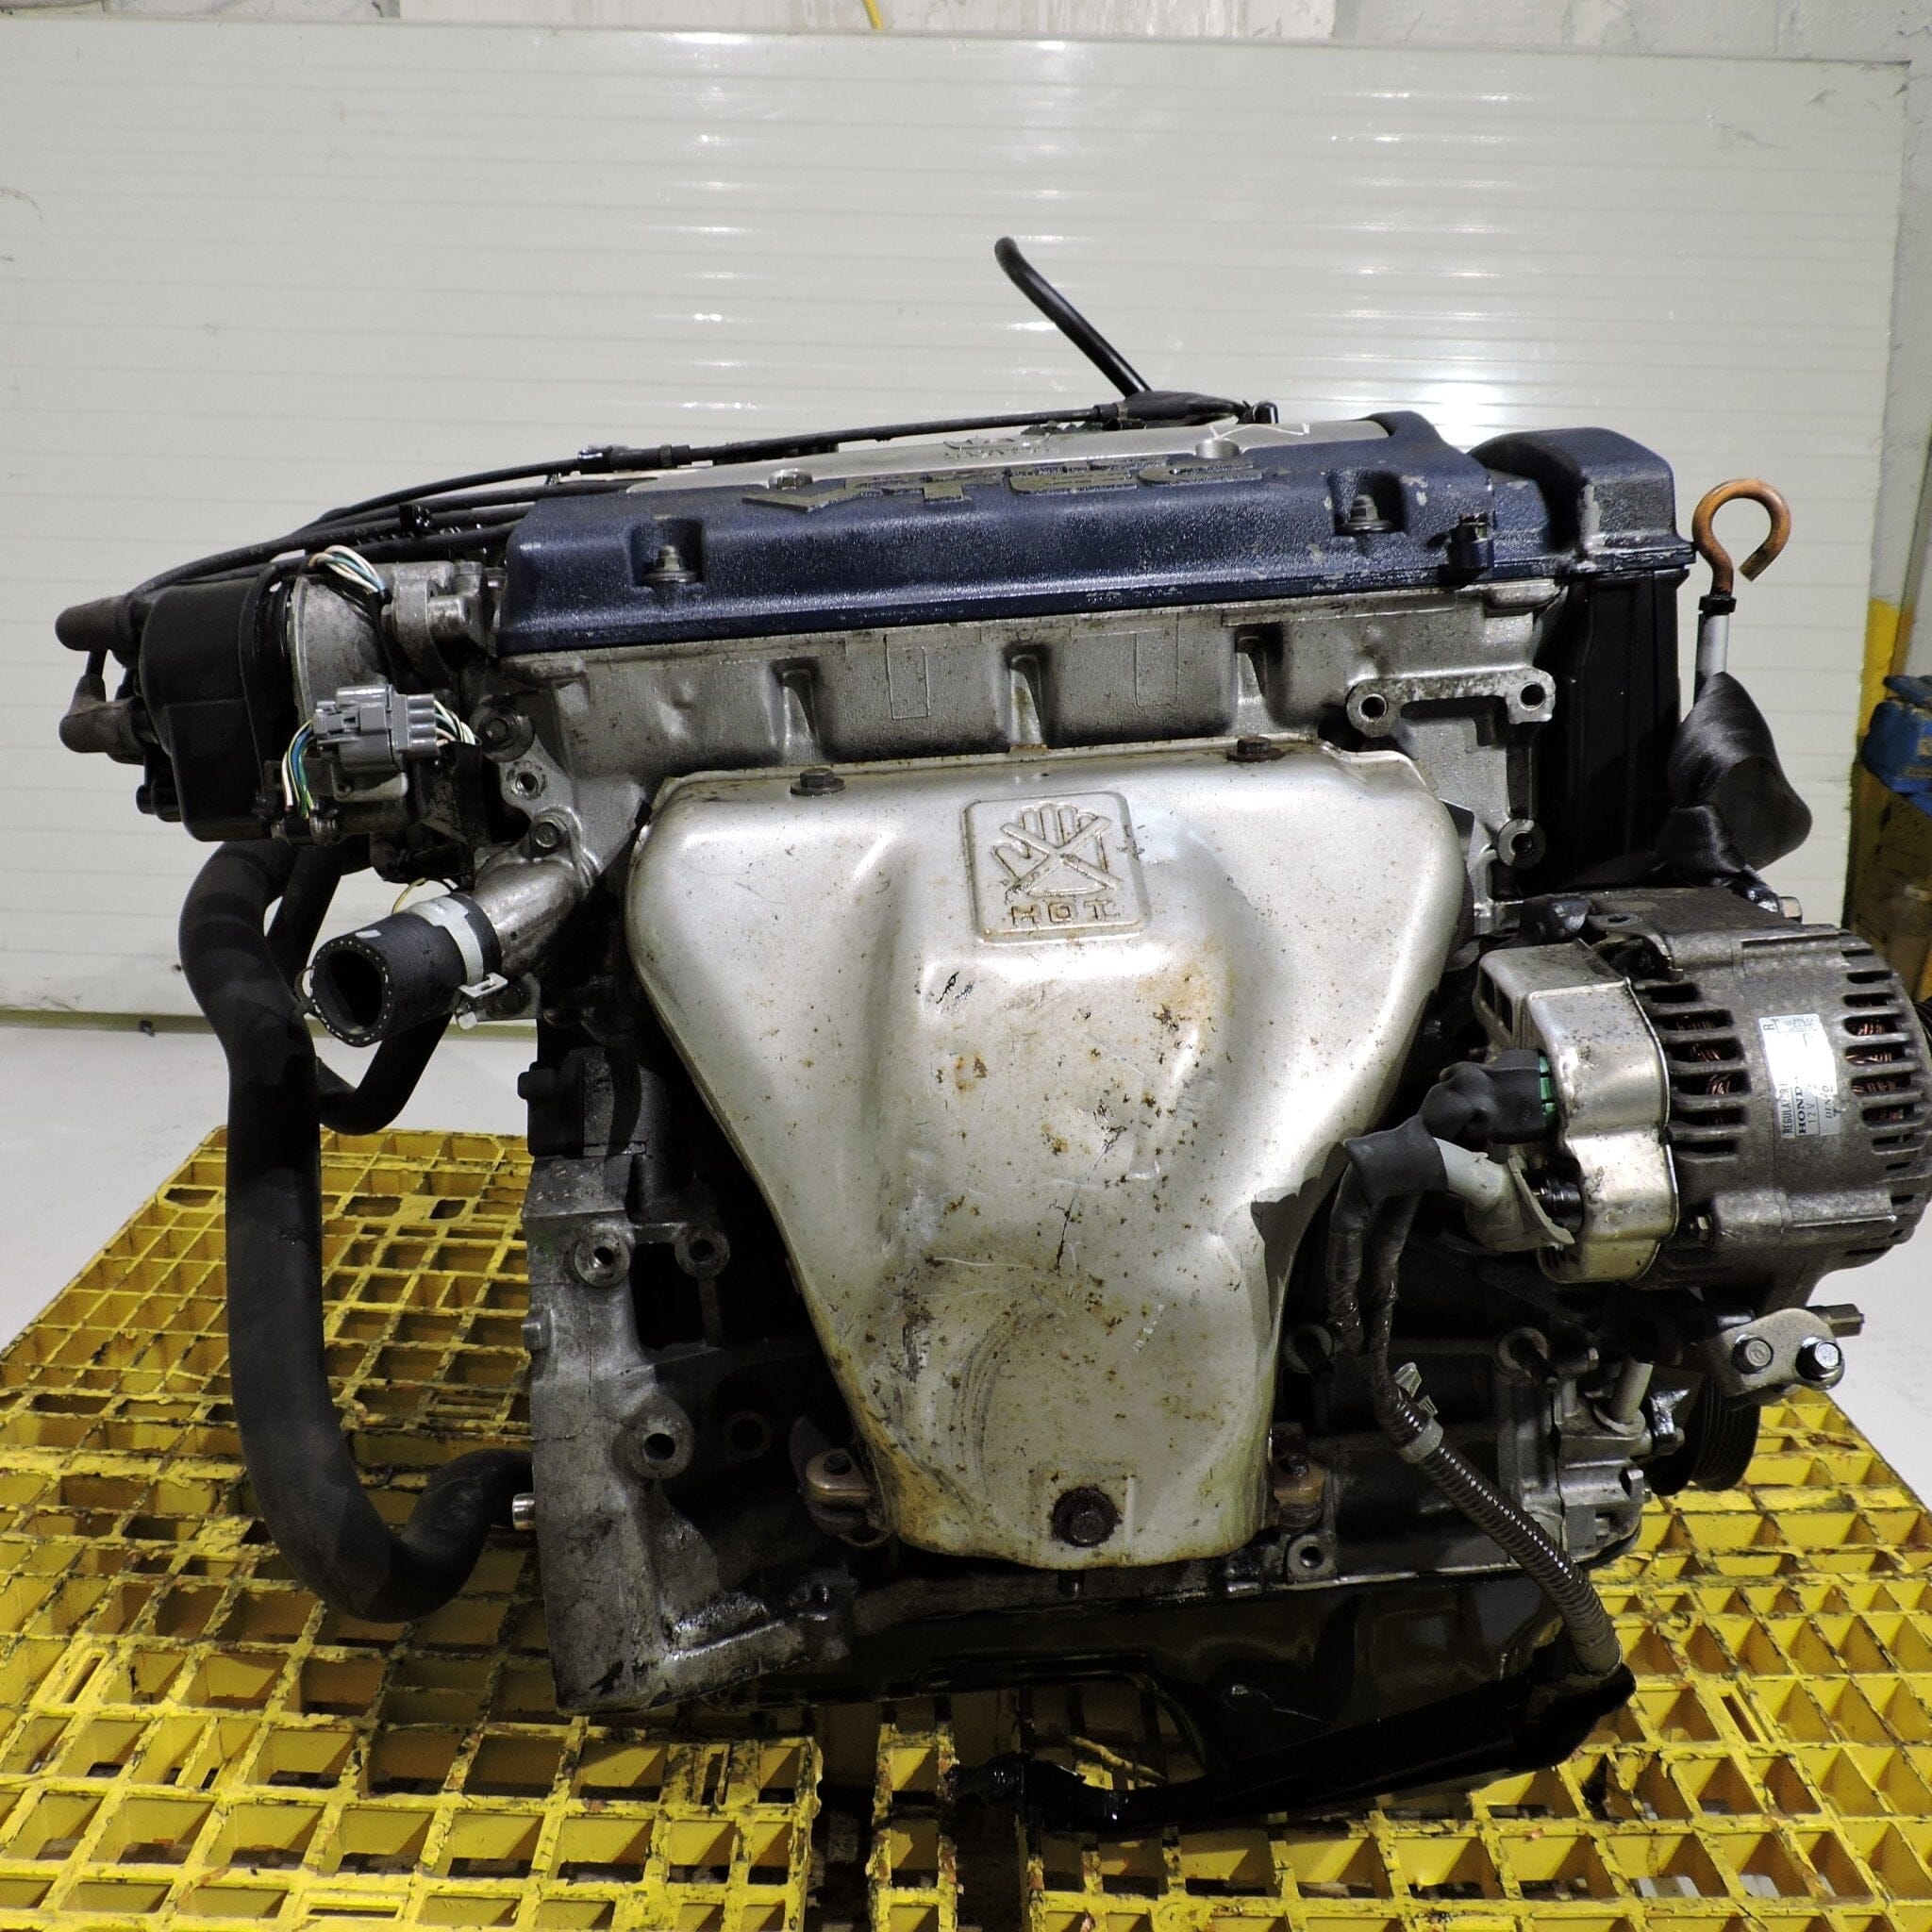 Honda Accord 2.3L JDM Engine Dohc Vtec H23a Blue Top